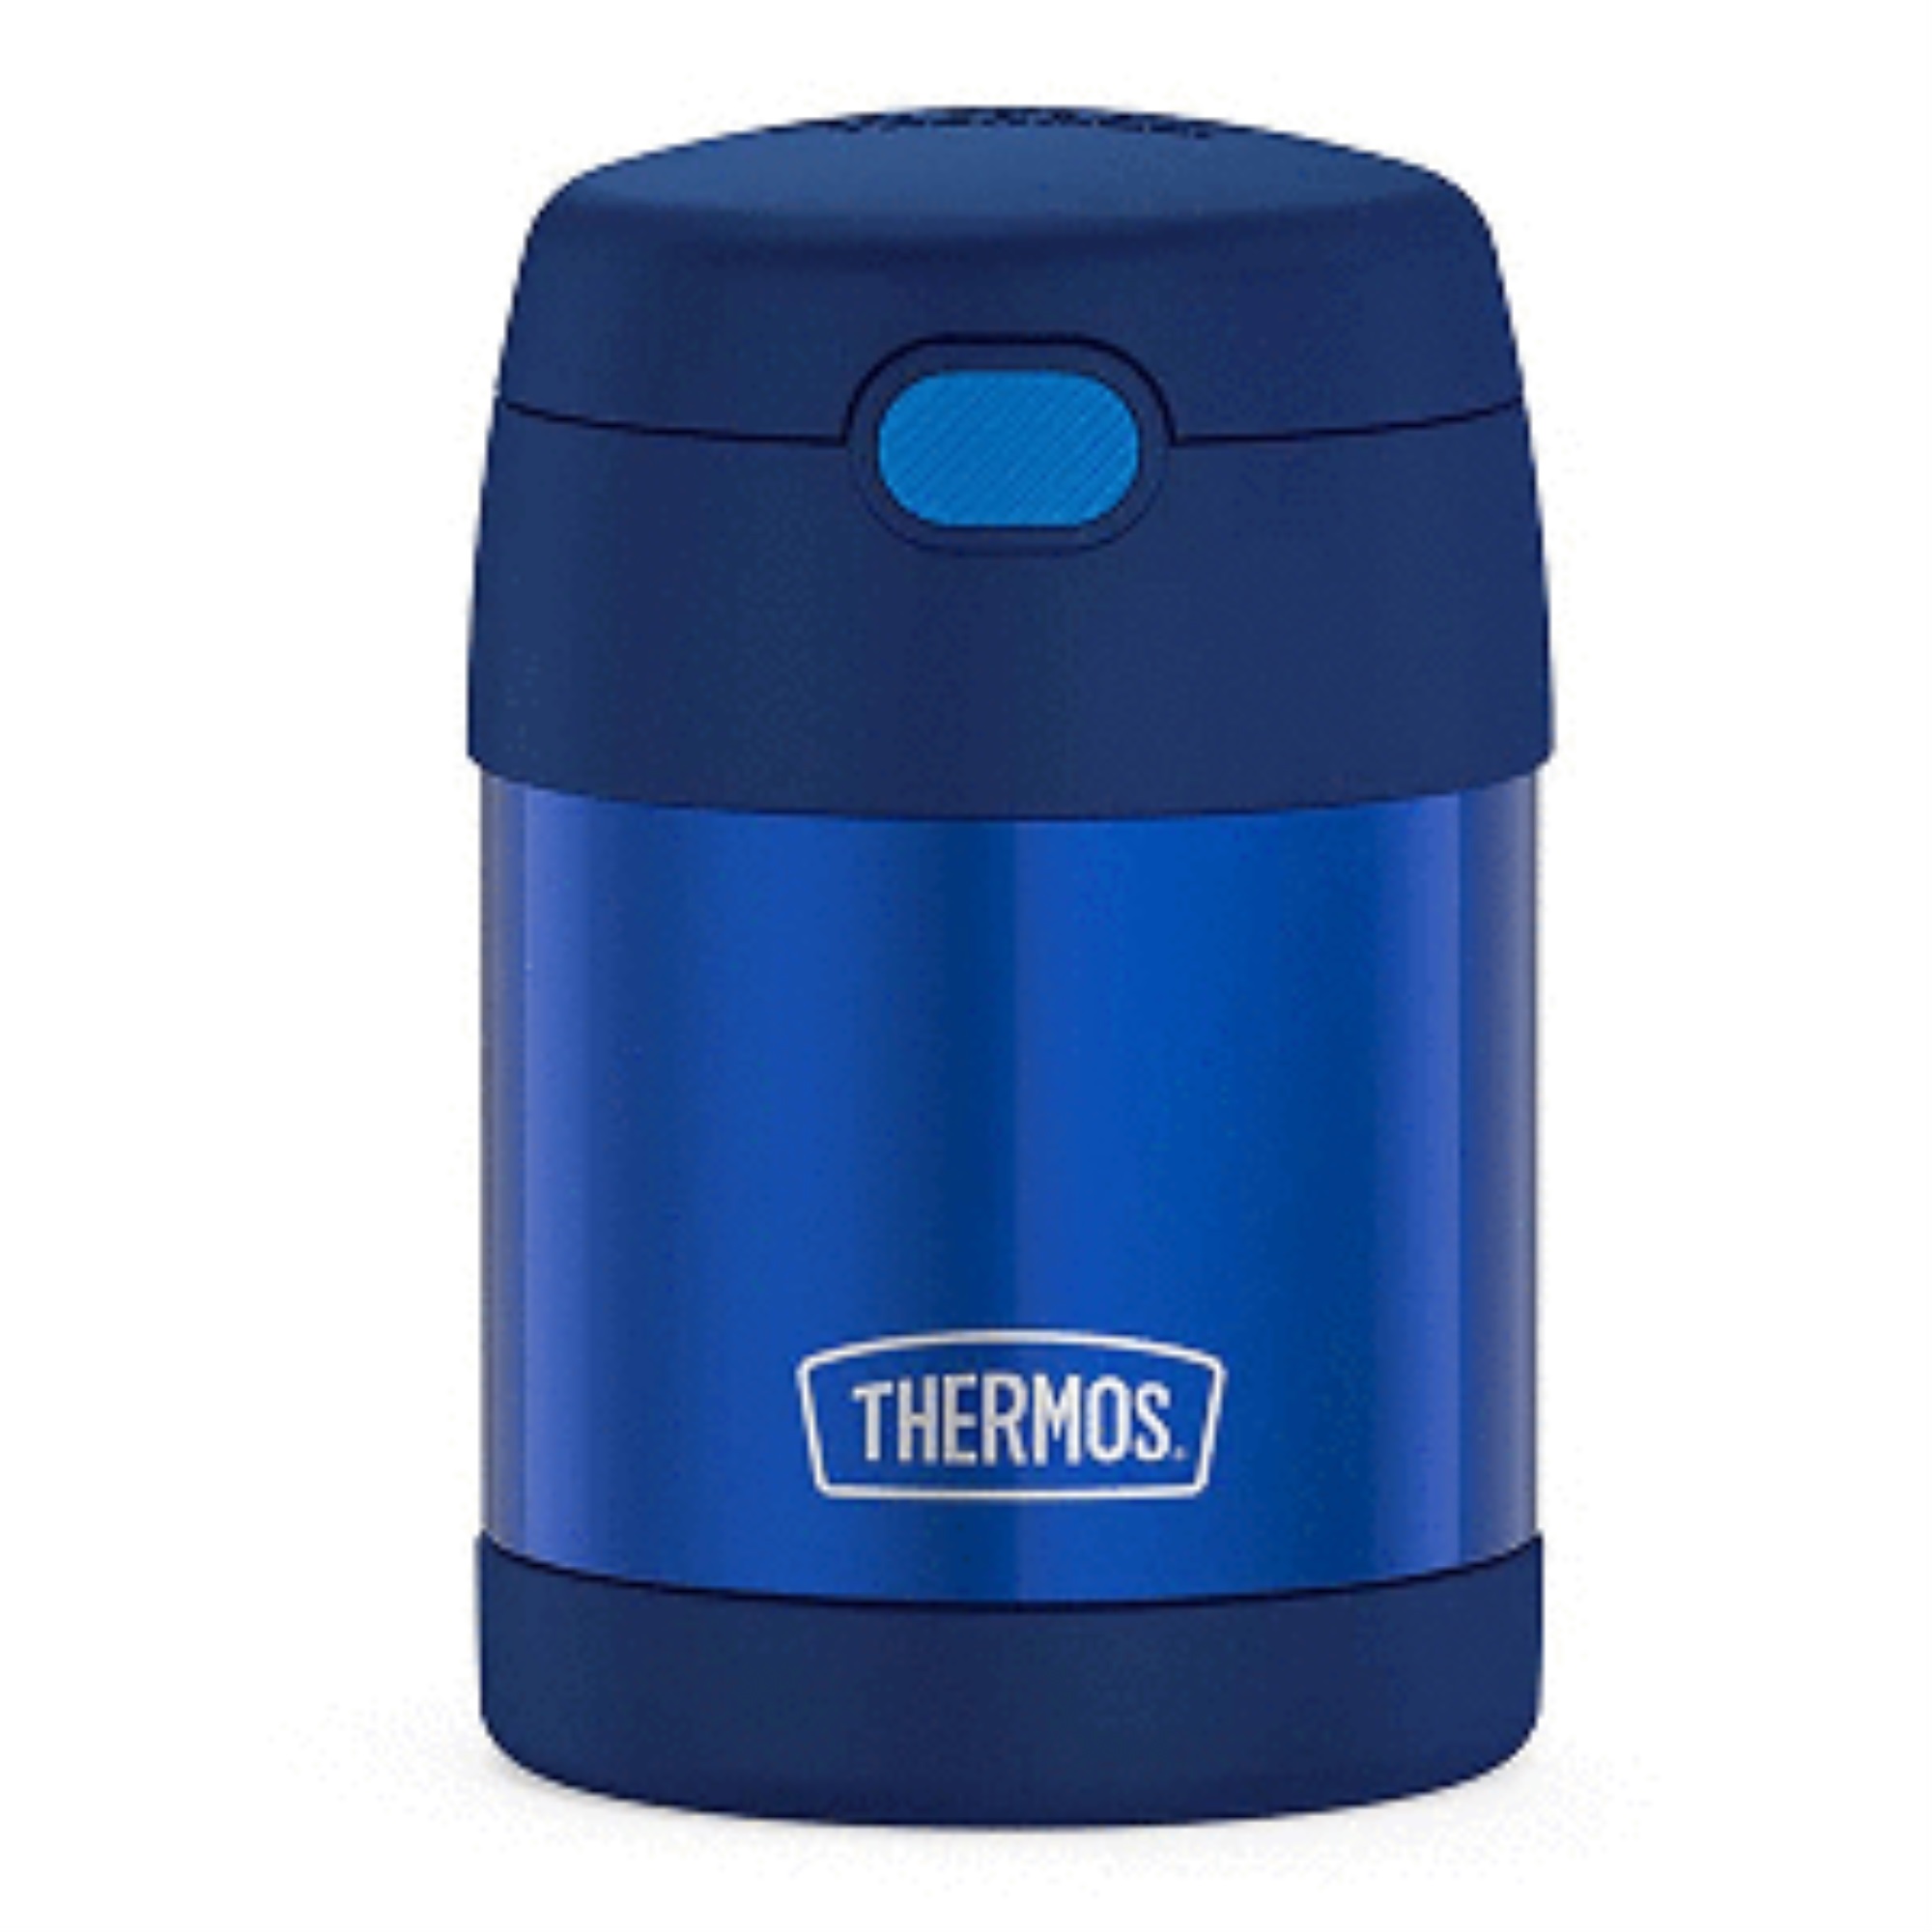 Thermos Funtainer Thermos F3100NY6 Thermos Funtainer 10 Oz. Navy Stainless Steel Food Jar F3100NY6